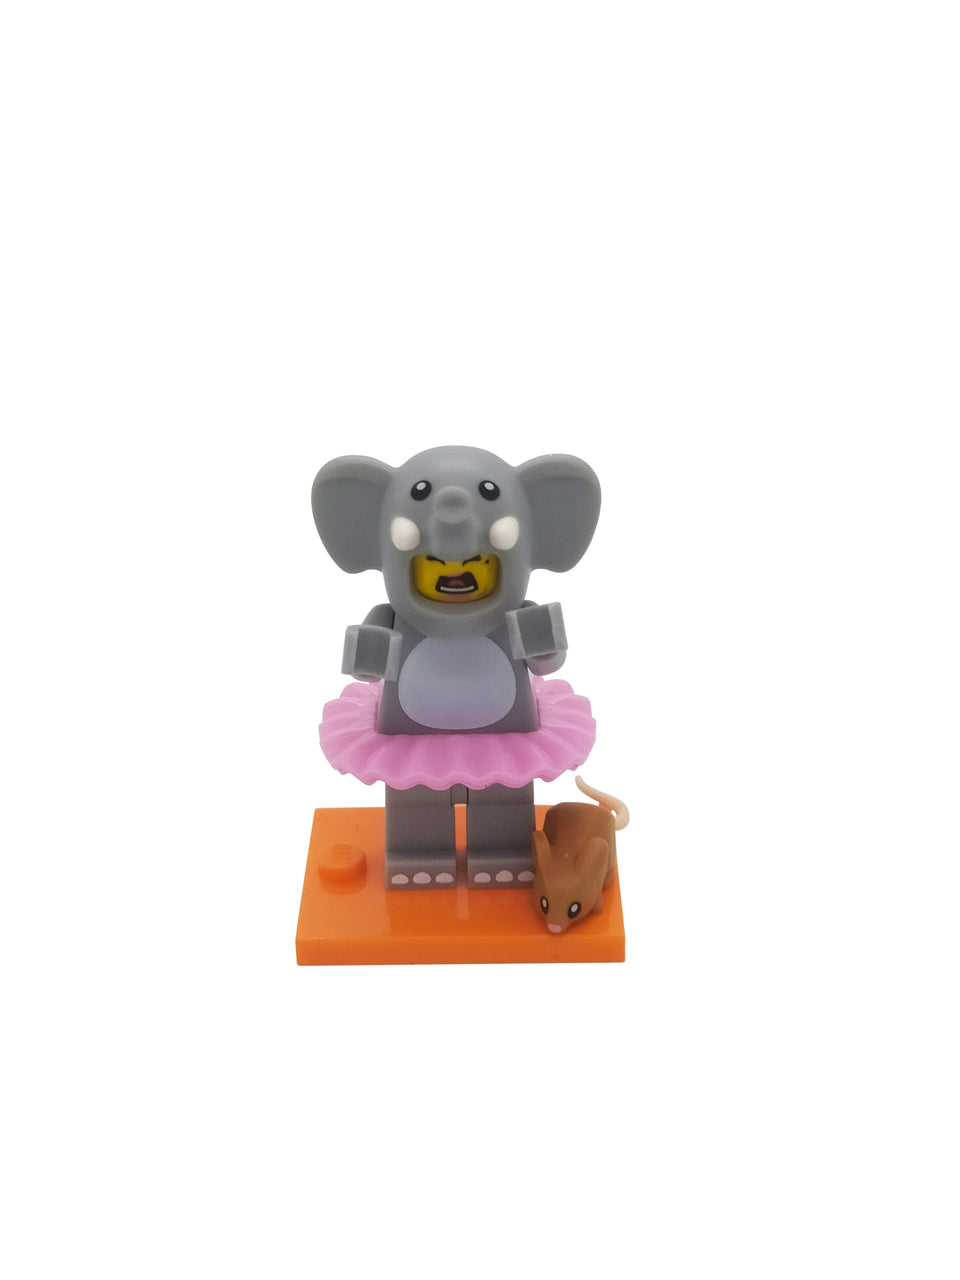 lego elephant figure